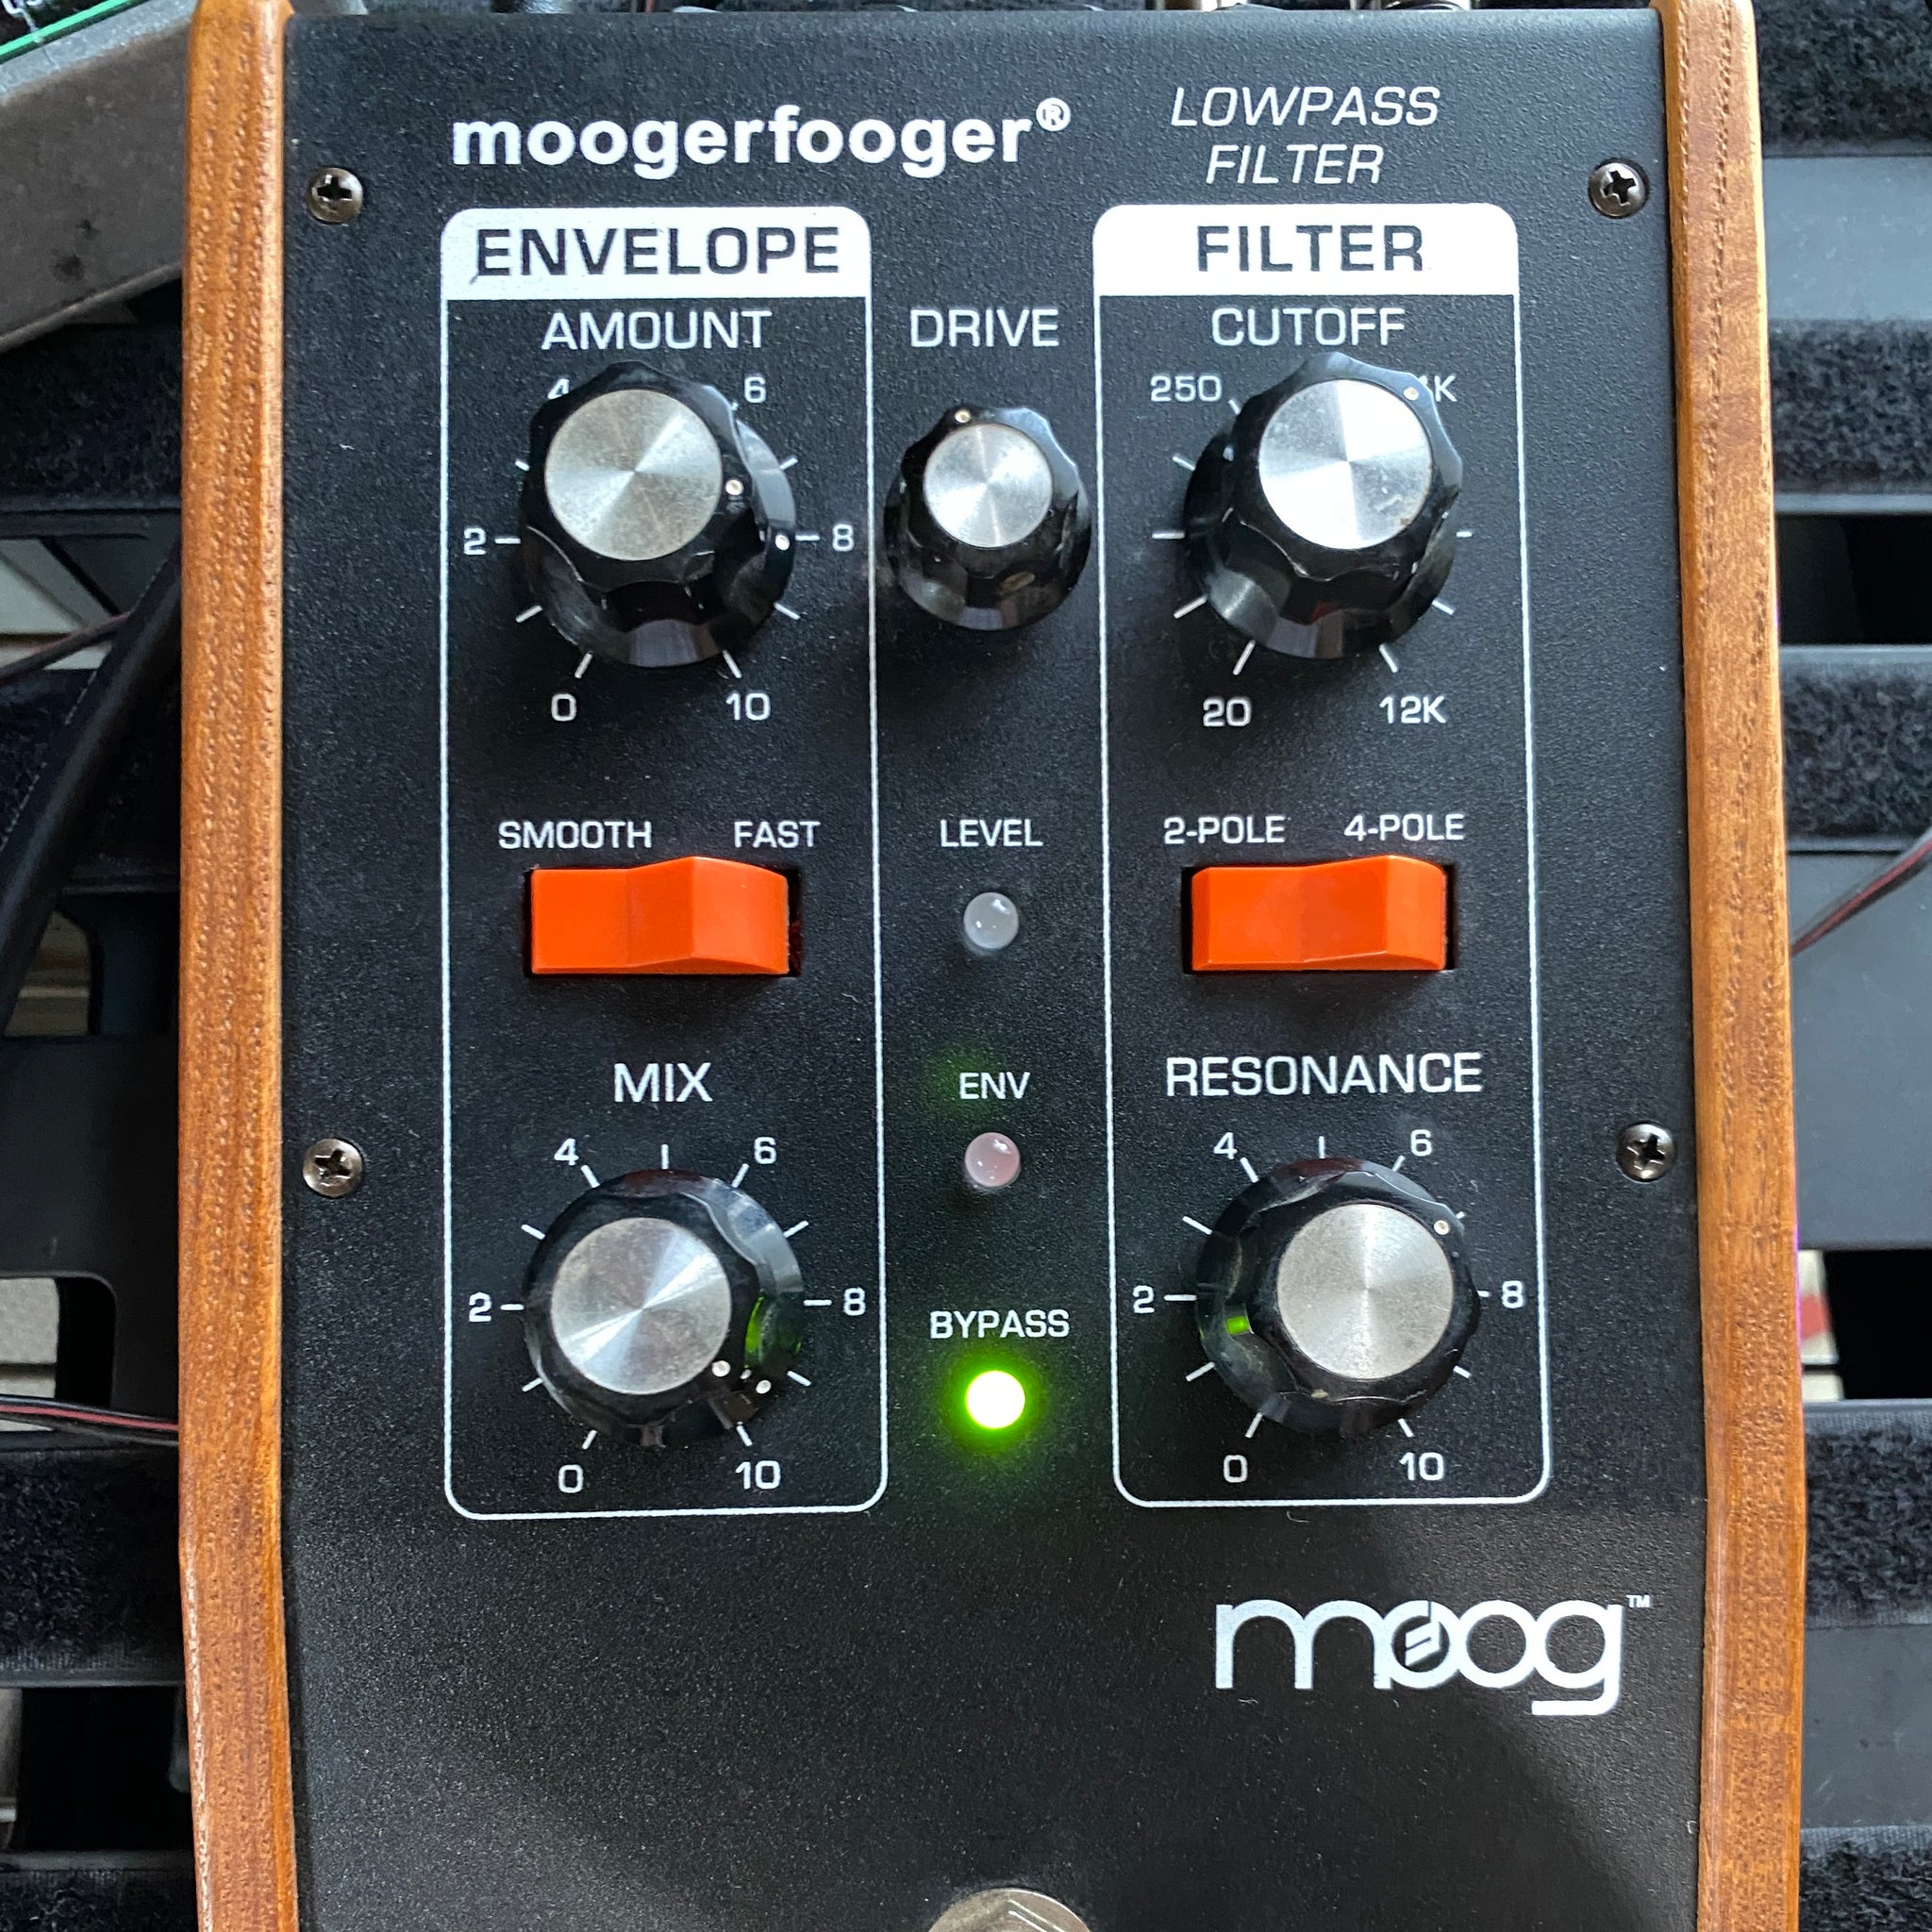 Moogerfooger MF-101 Lowpass Filter